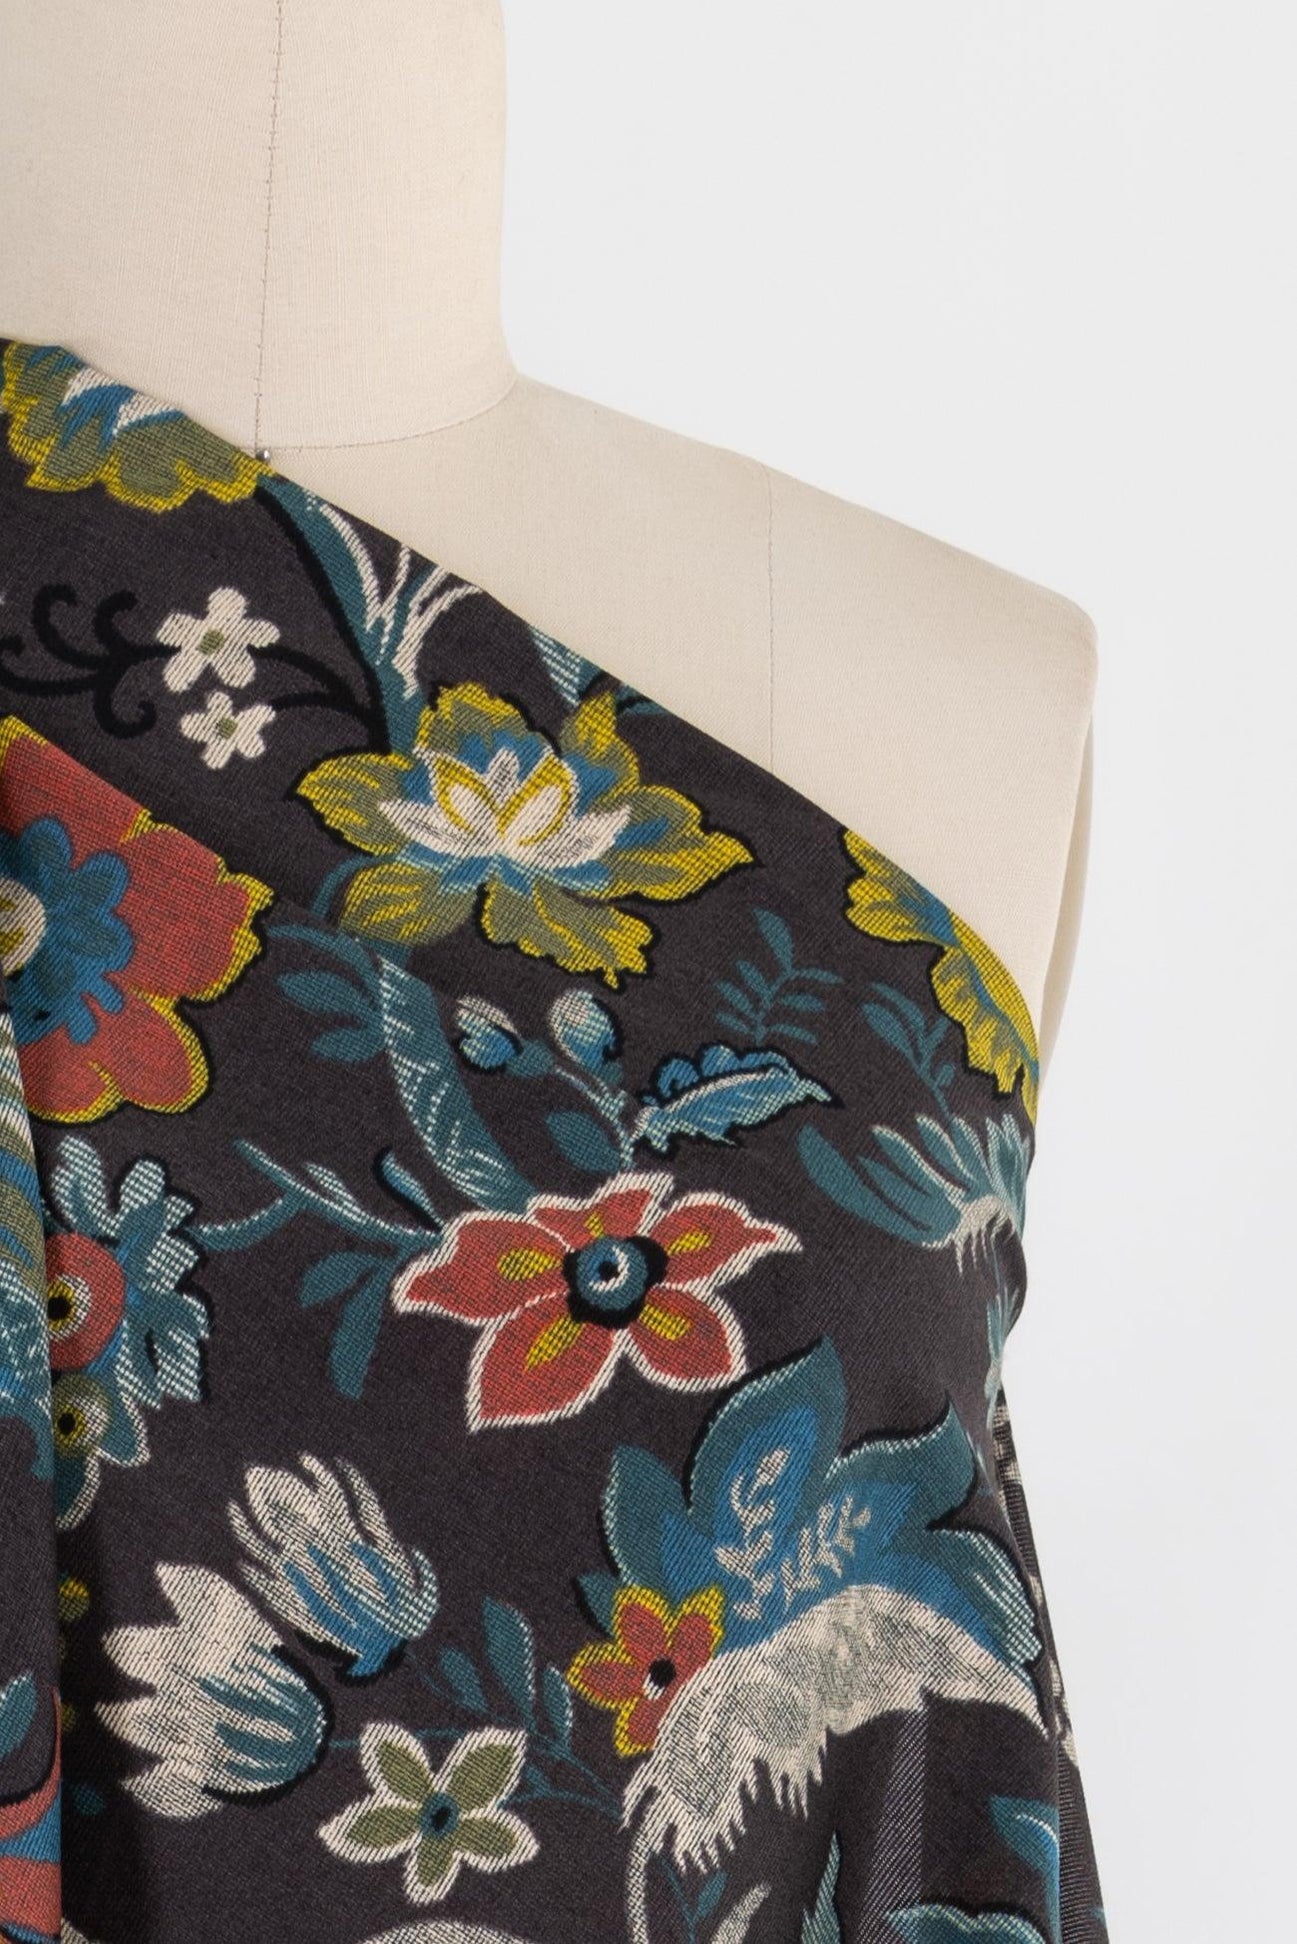 Woven Cottons | Marcy Tilton | Online Fabric Store– Marcy Tilton Fabrics